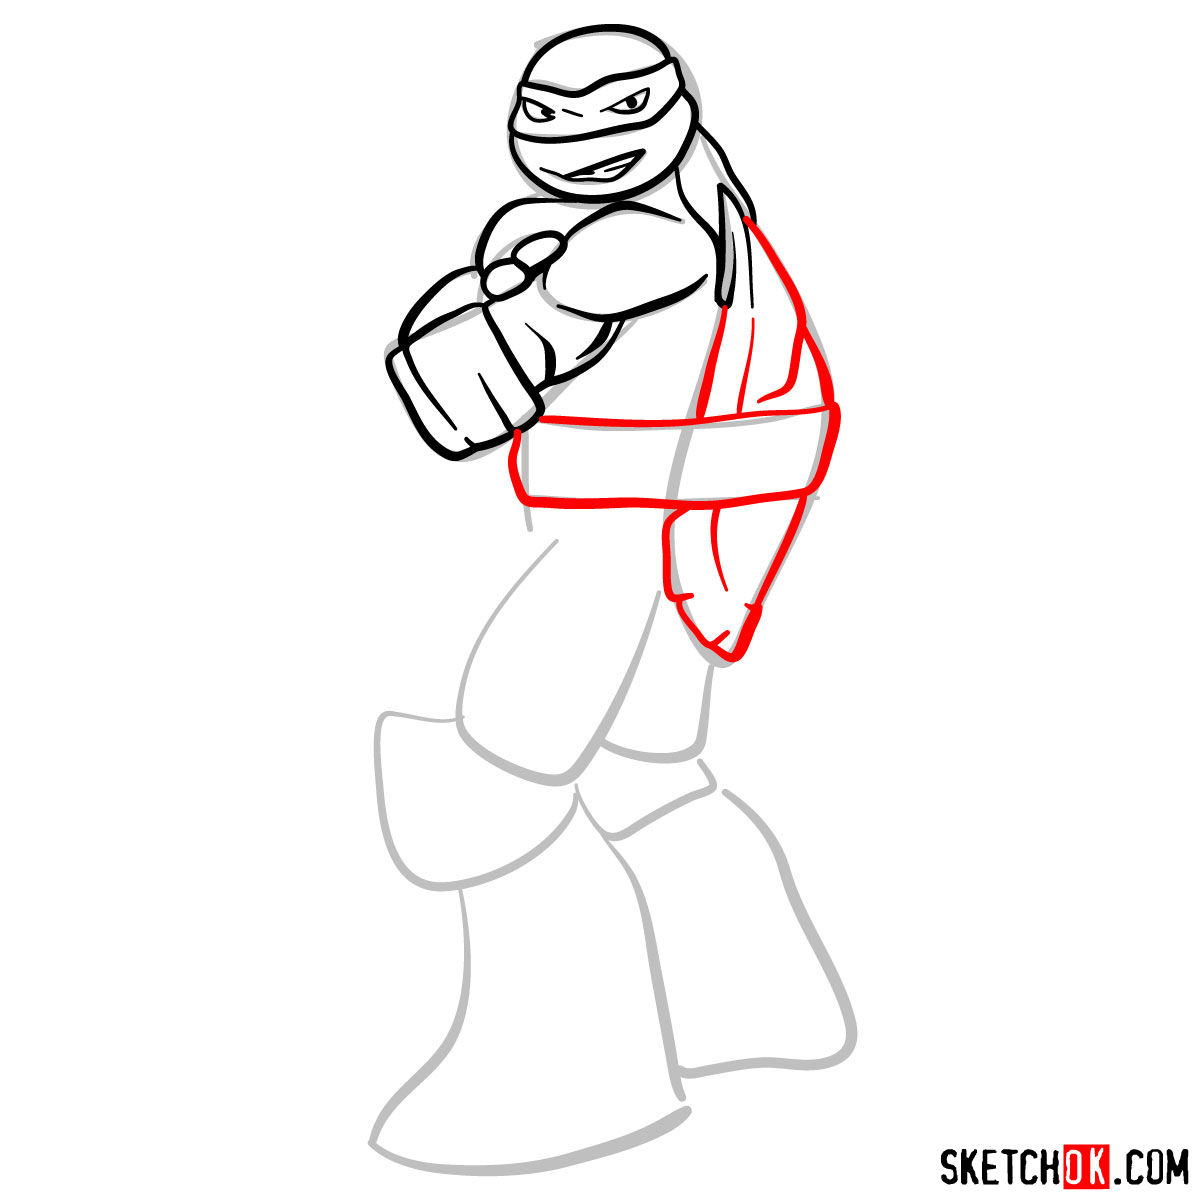 How to draw Raphael ninja turtle cartoon style - step 06